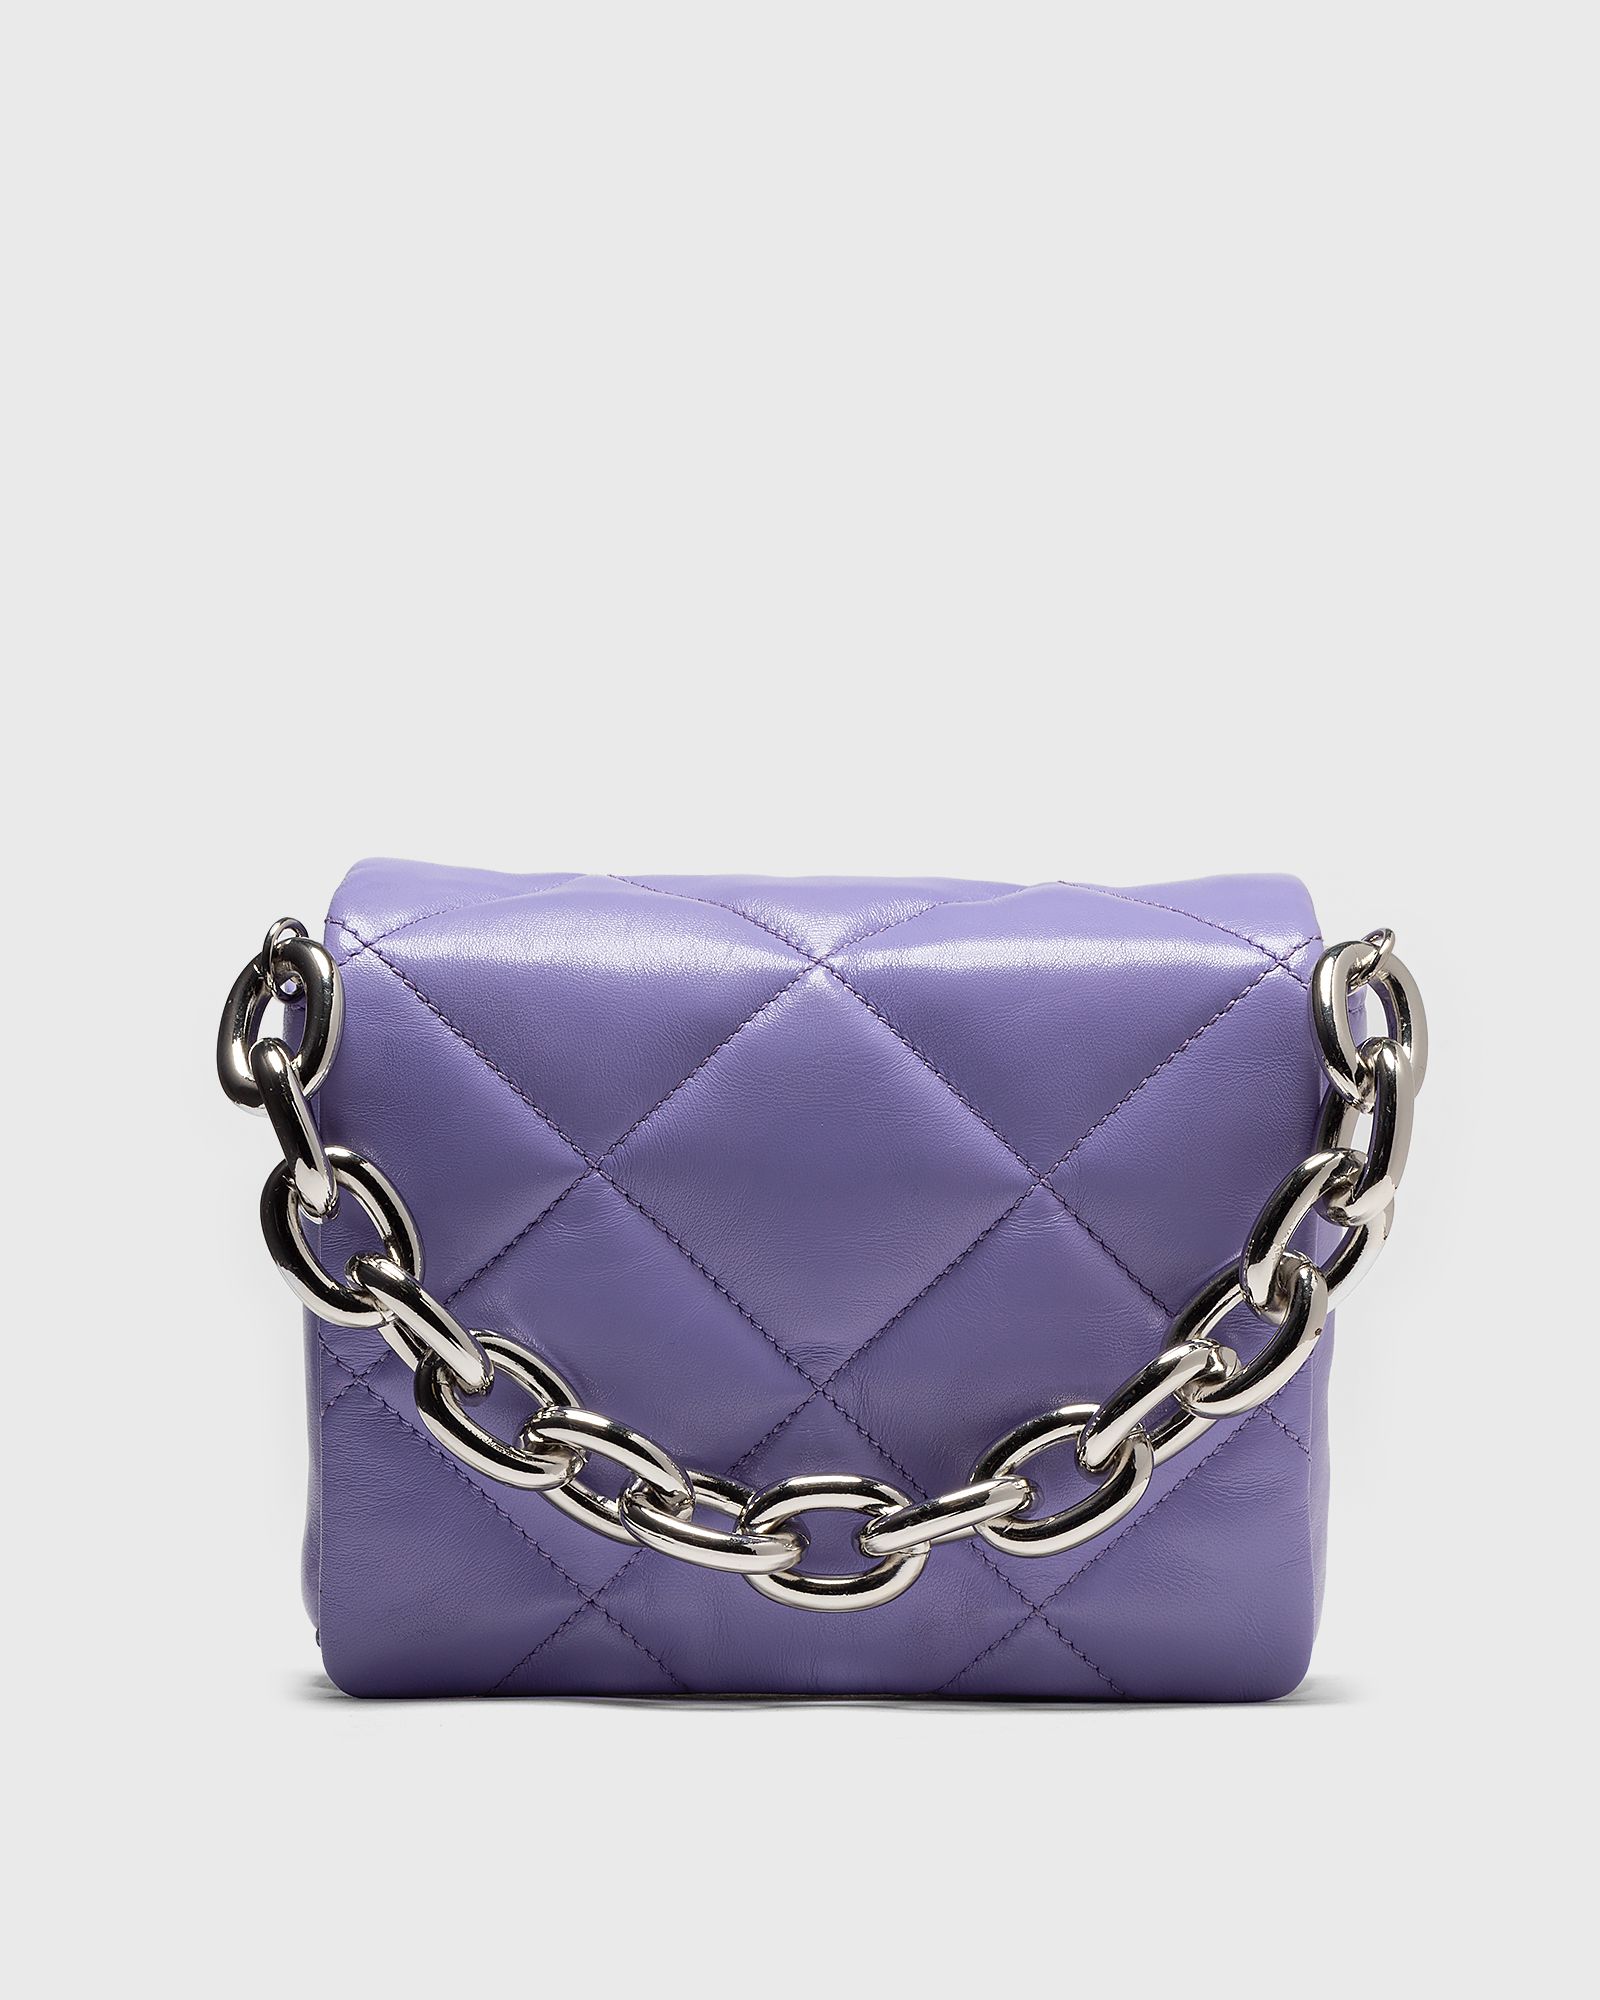 Stand Studio - hestia bag women handbags purple in größe:one size